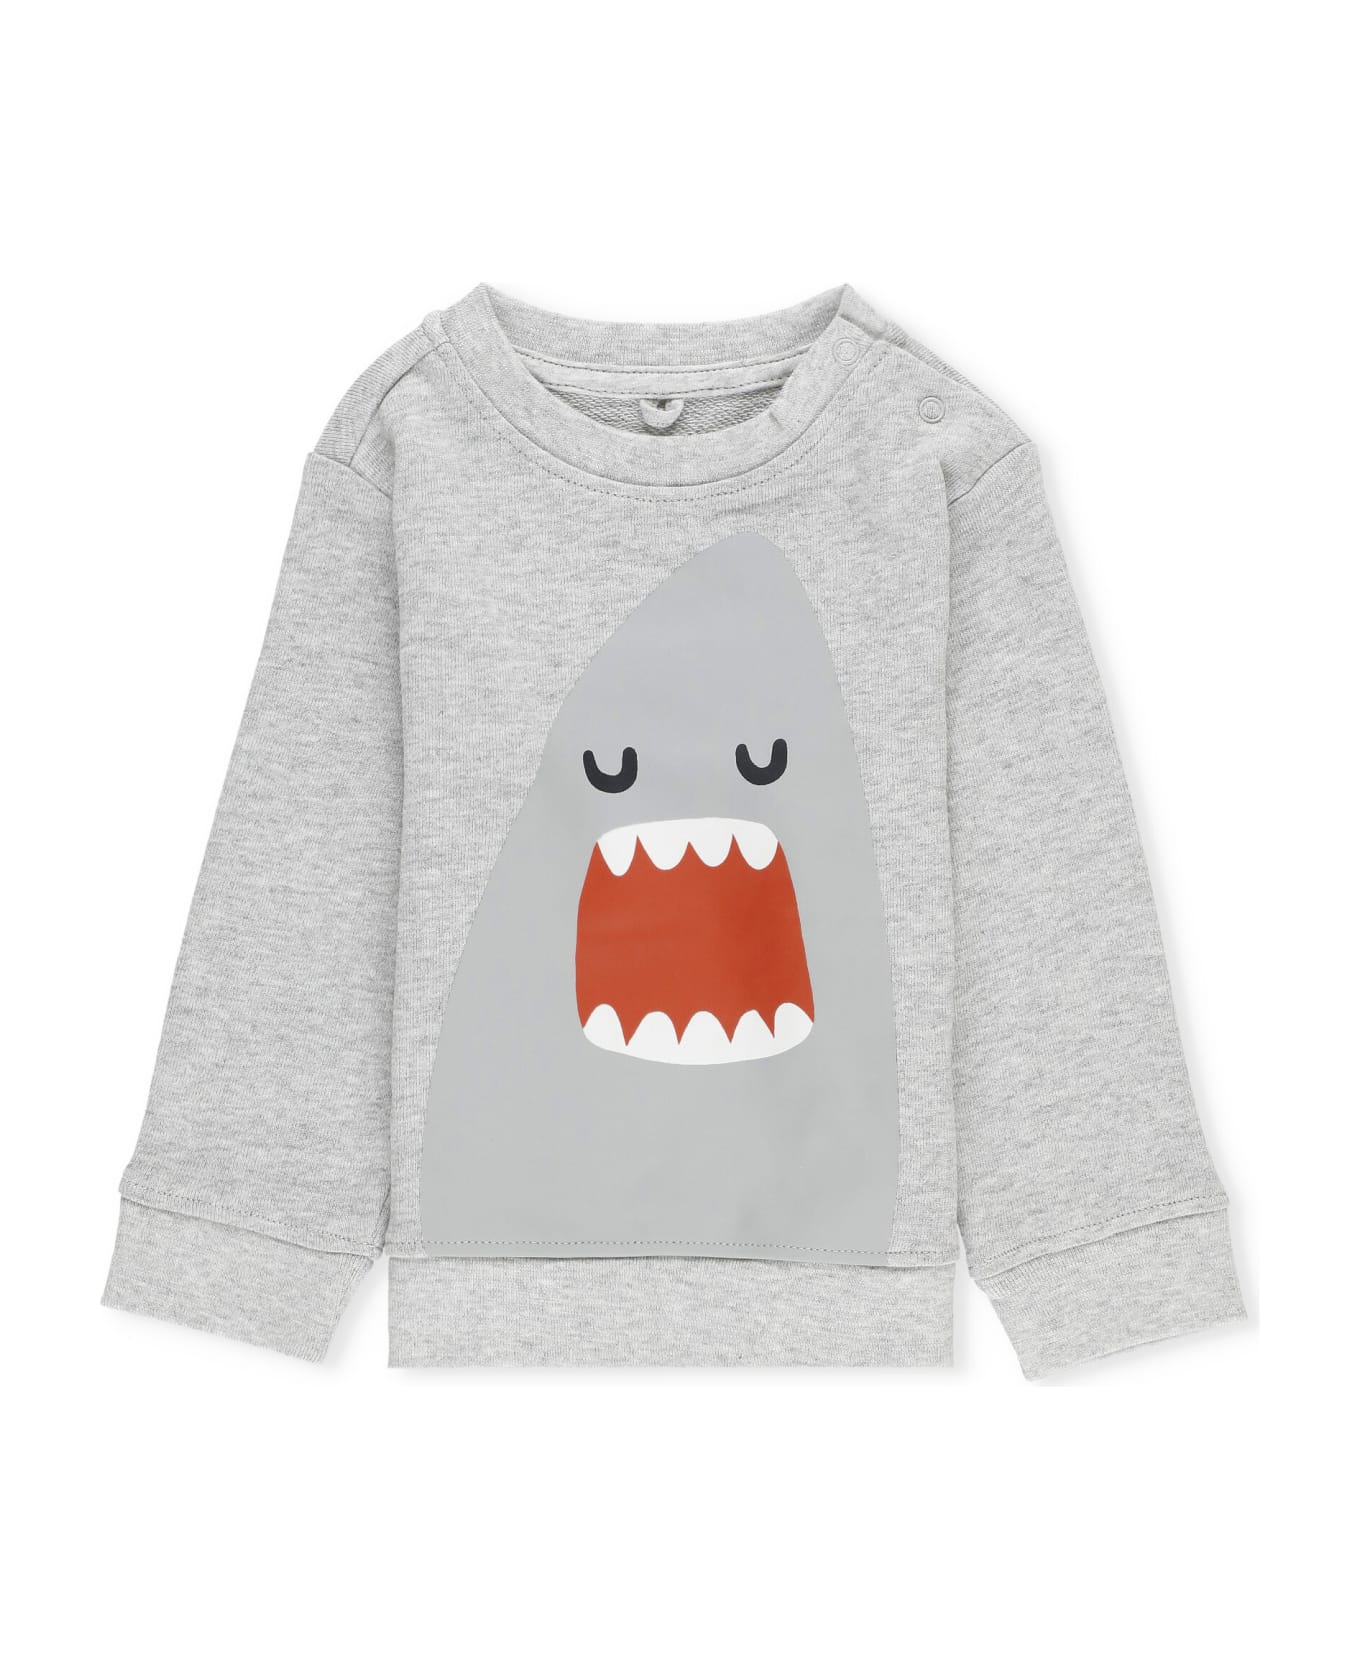 Stella McCartney Kids Sweatshirt With Print - Grey